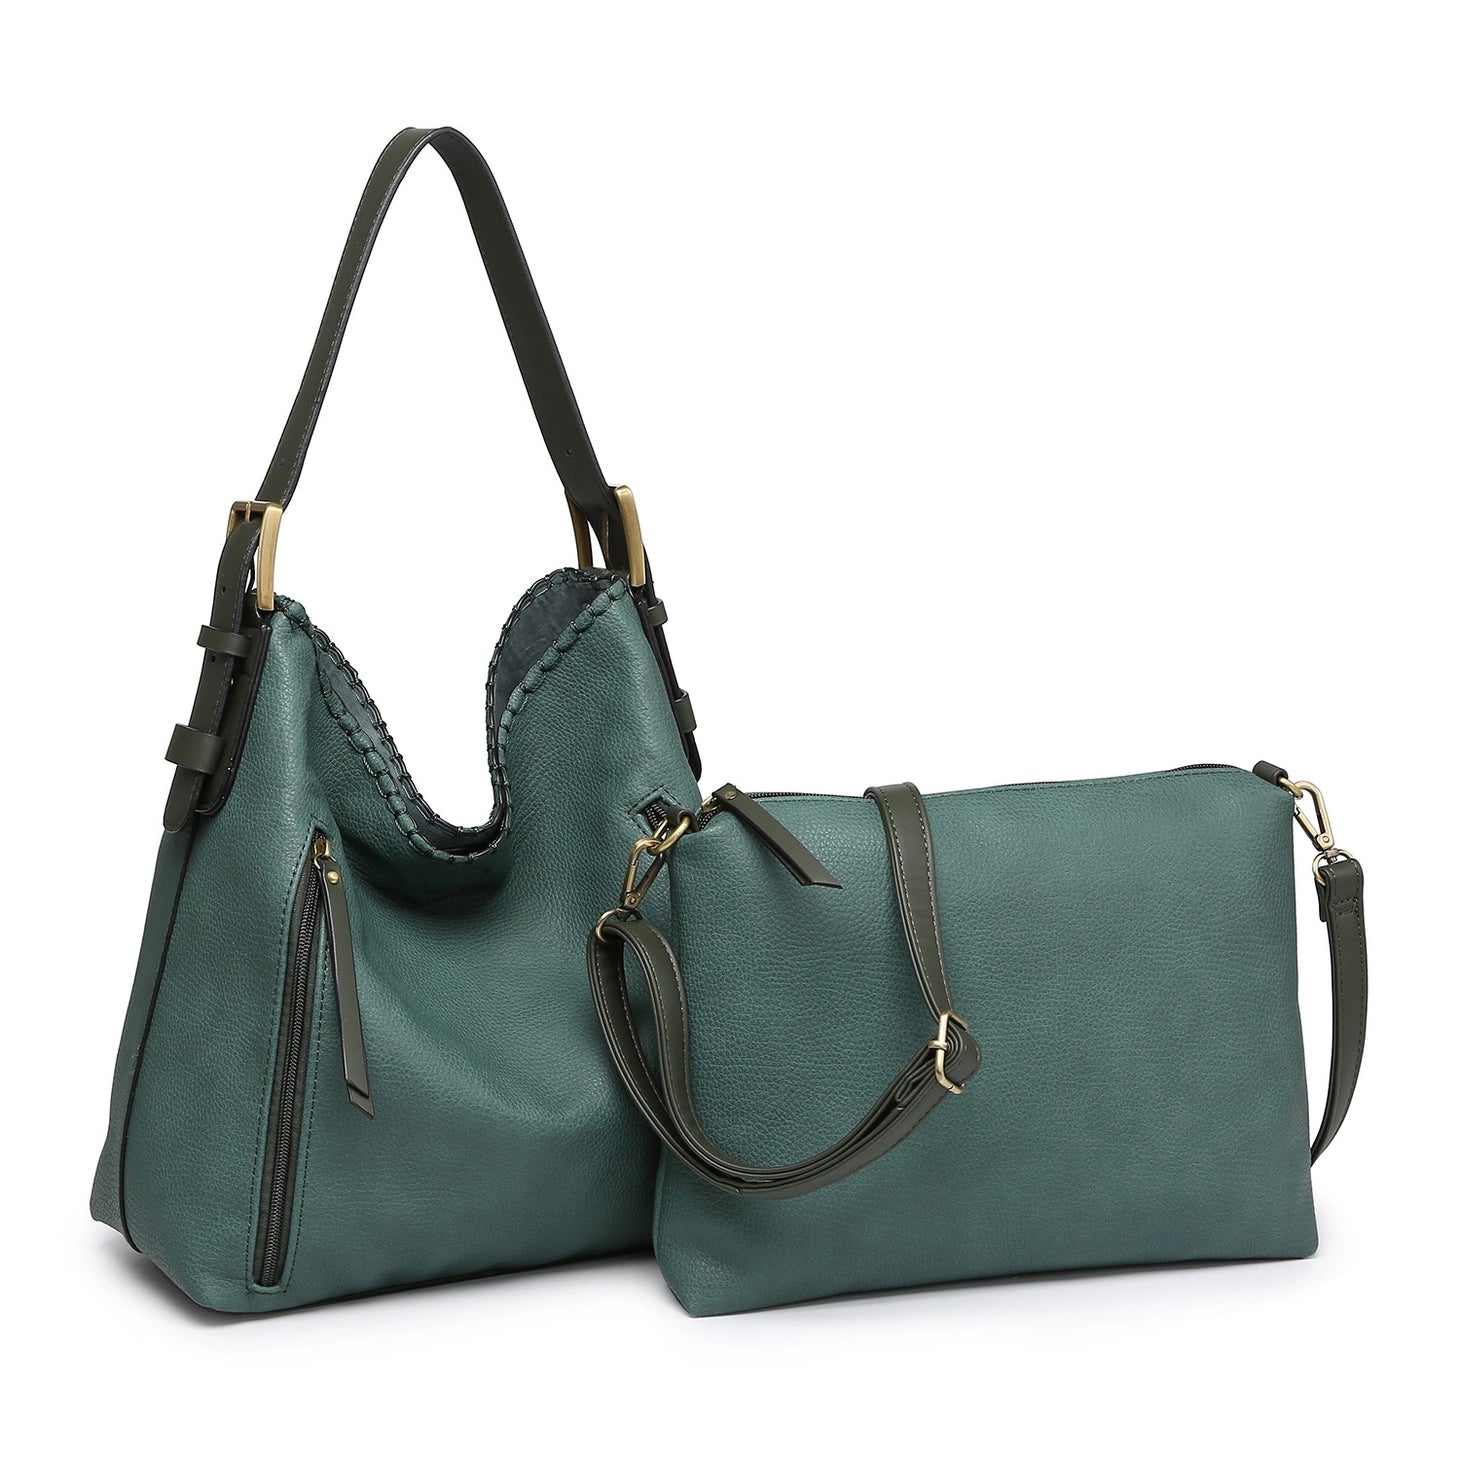 Buy VOFASH Women Handbags | Shoulder Bags | Bags For Women | Ladies Bags |  Hobo Bags | Ladies Purse (Forest Green) at Amazon.in